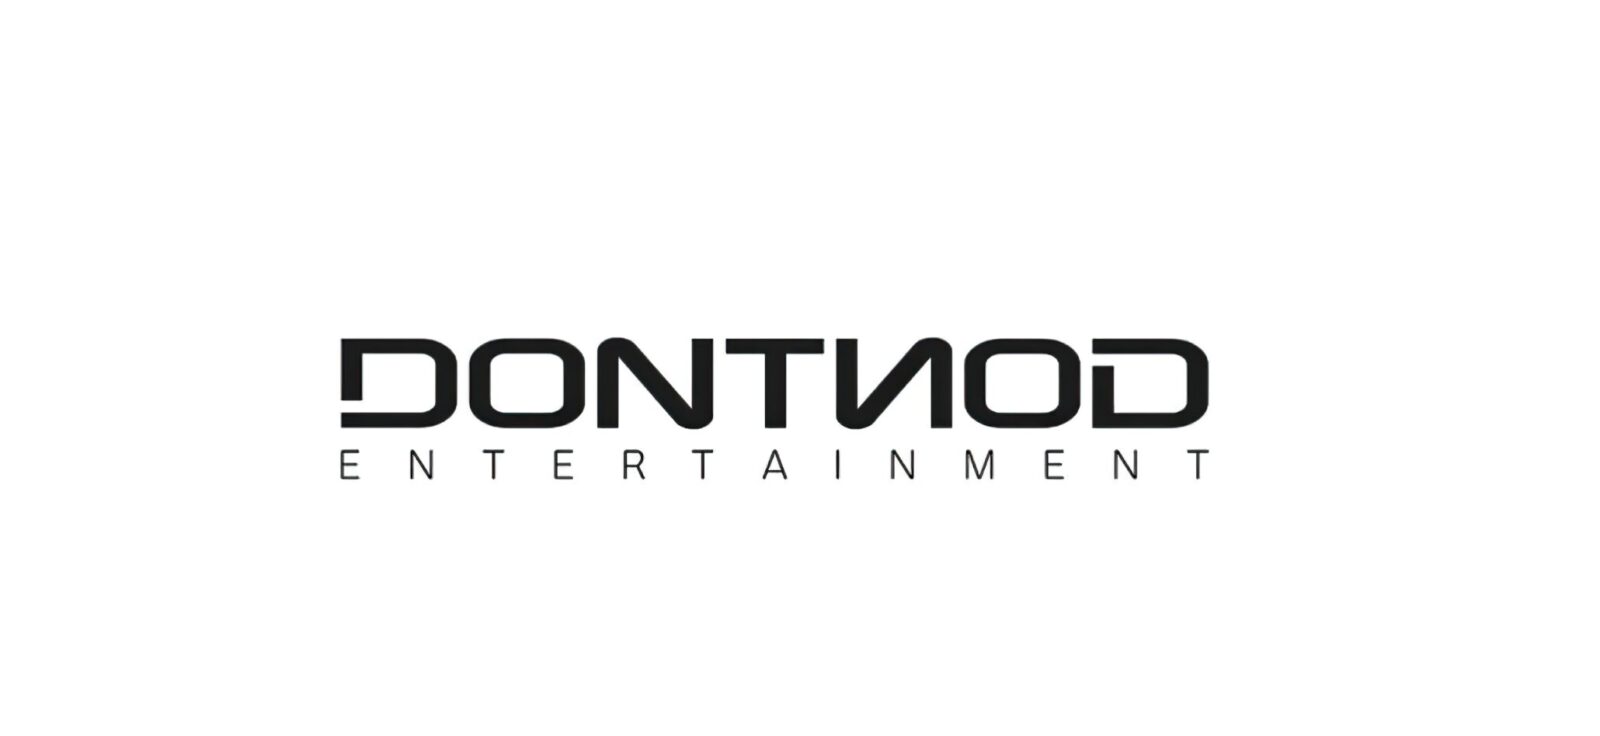 dontnod logo